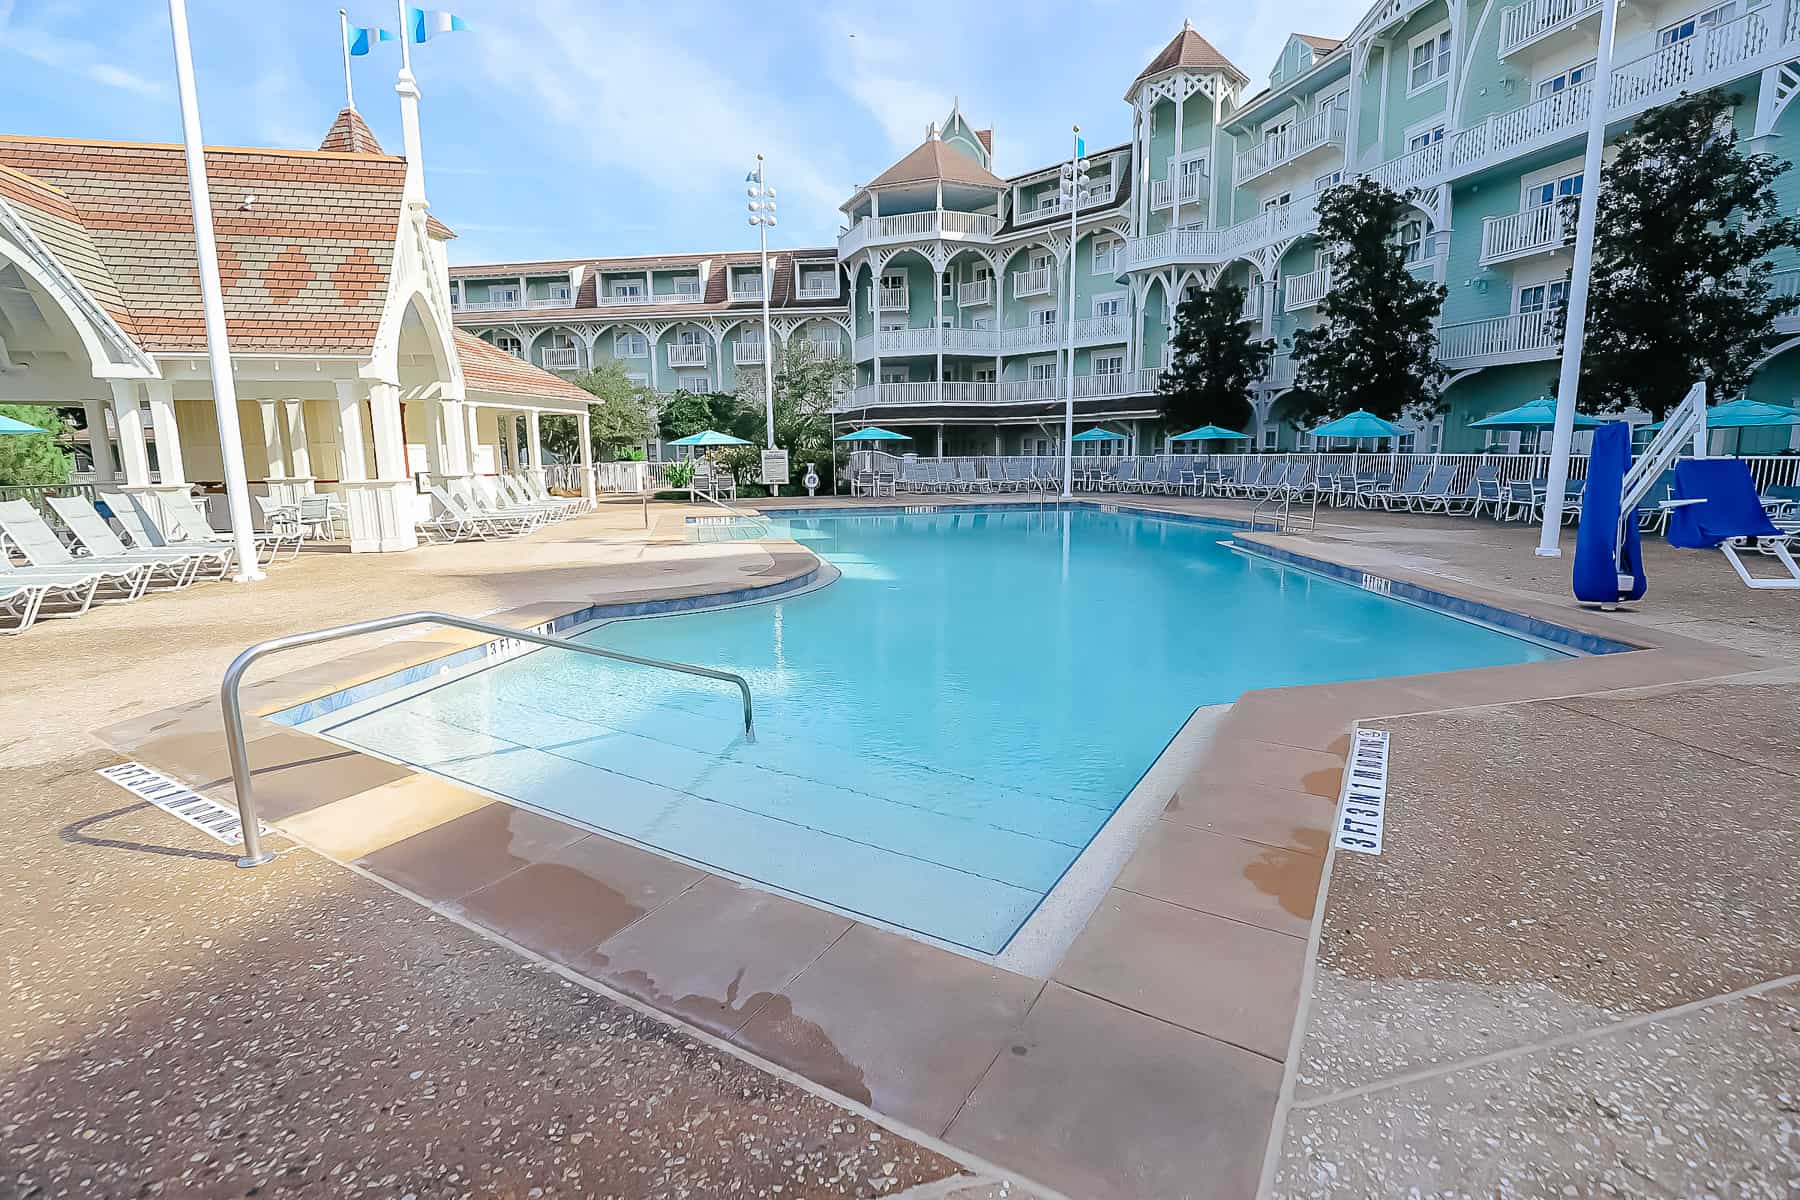 Newly resurfaced pool at Disney's Beach Club Villas